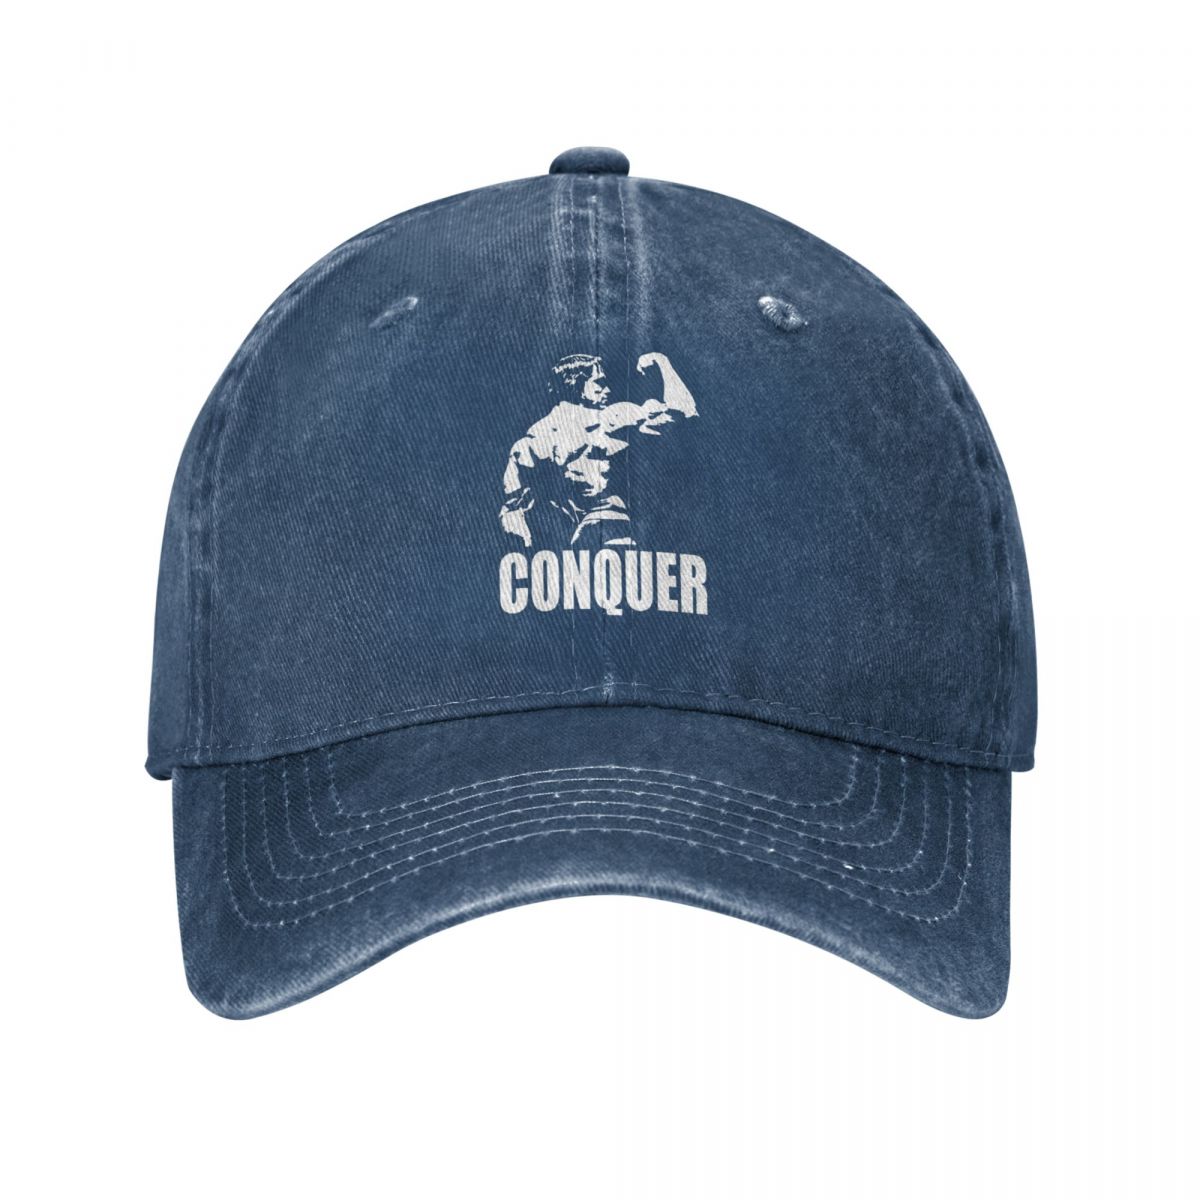 Conquer Arnold Schwarzenegger - Snapback Baseball Cap - Summer Hat For Men and Women-Navy Blue-One Size-